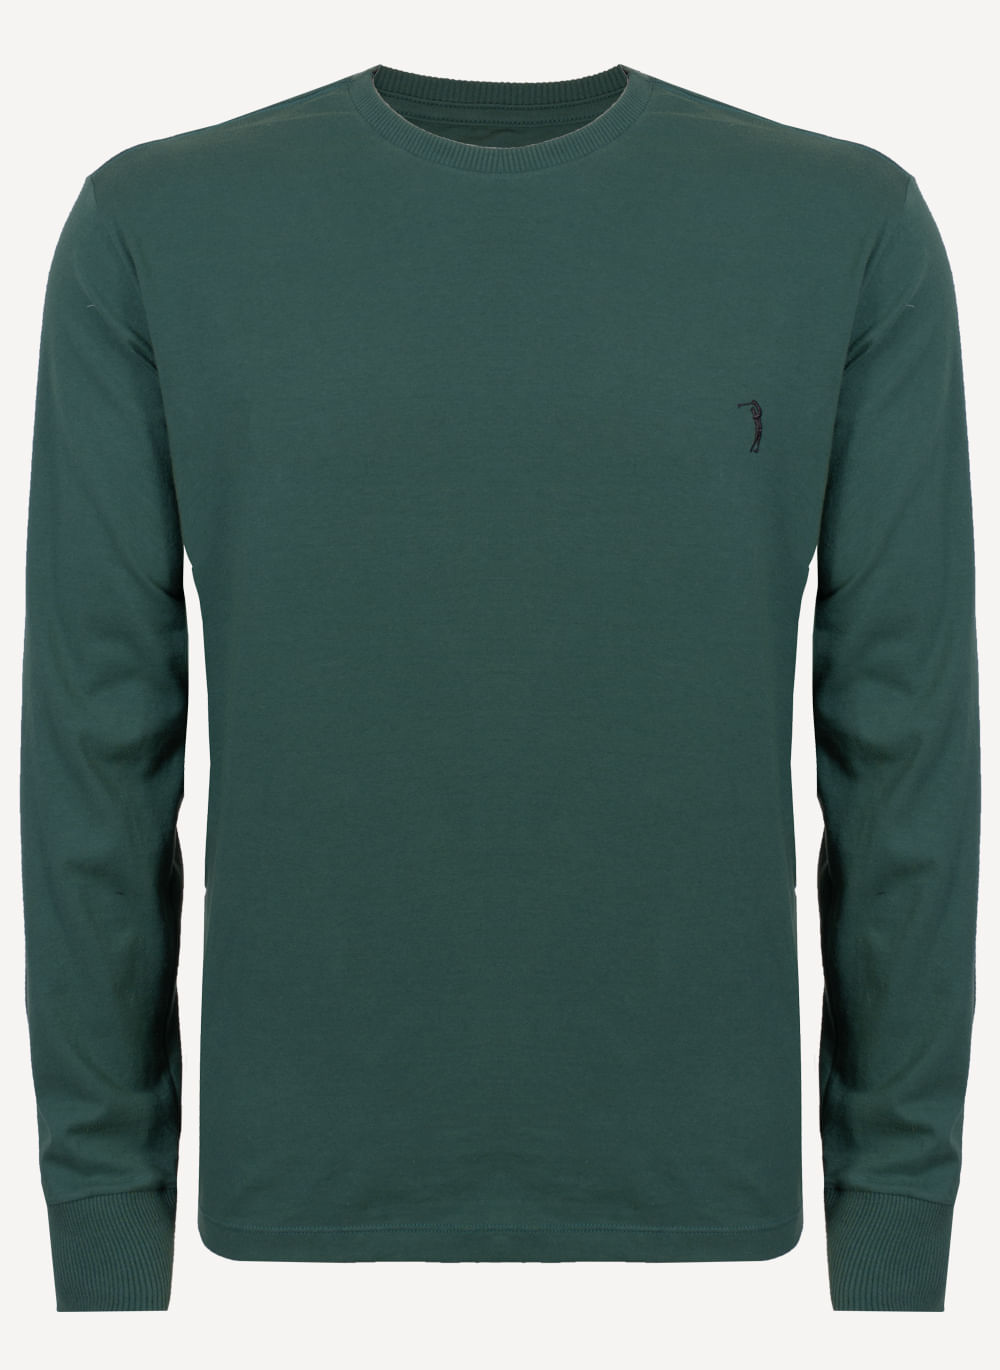 Camiseta-Estampada-Aleatory-ML-Since-Verde-Verde-P